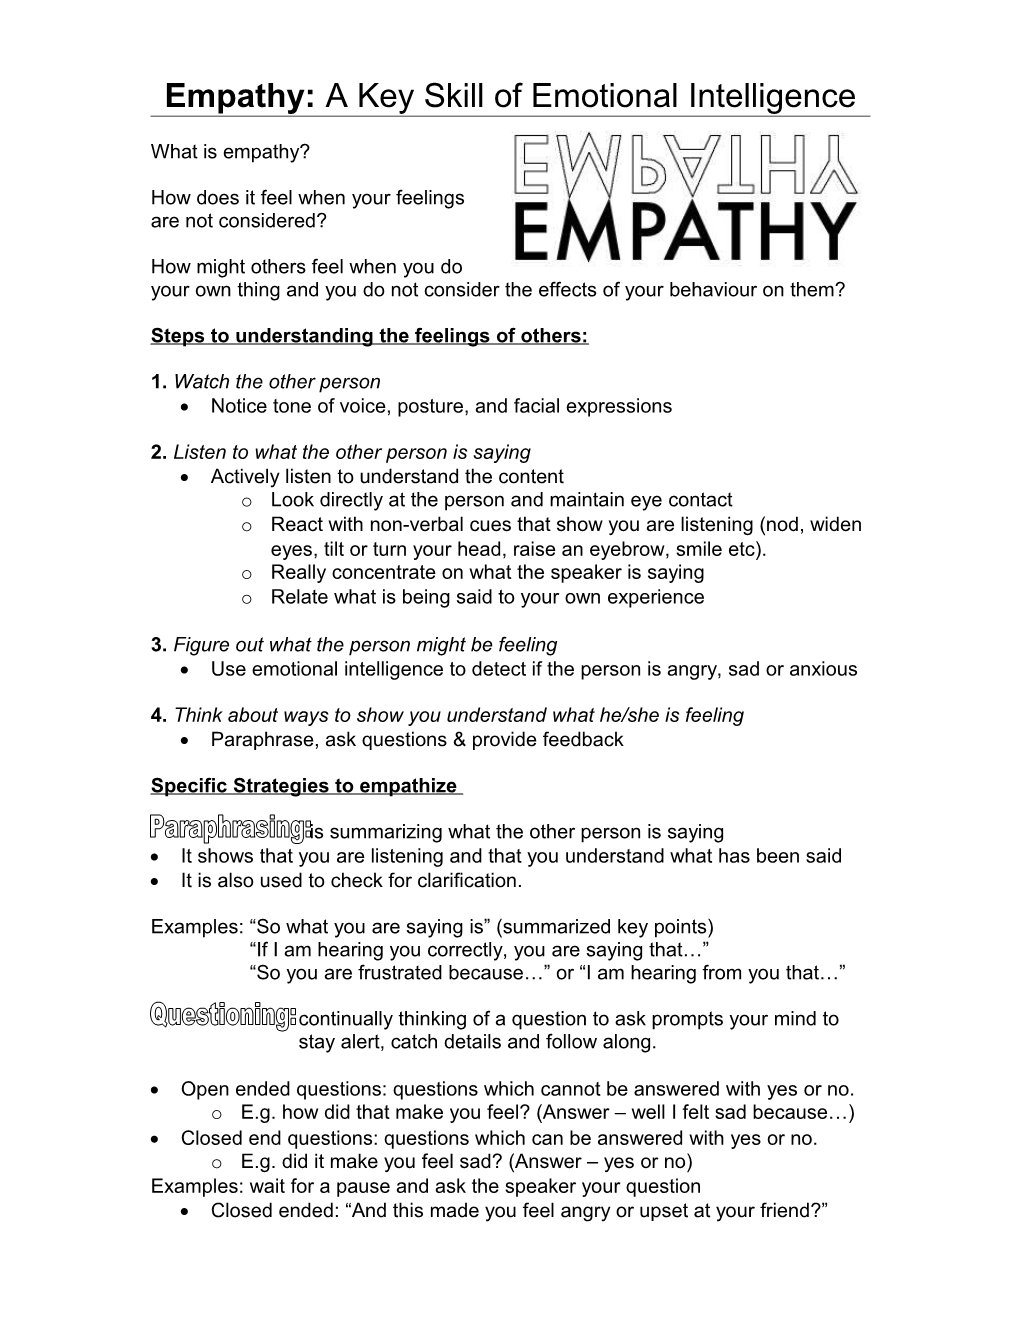 Empathy: a Key Skill of Emotional Intelligence